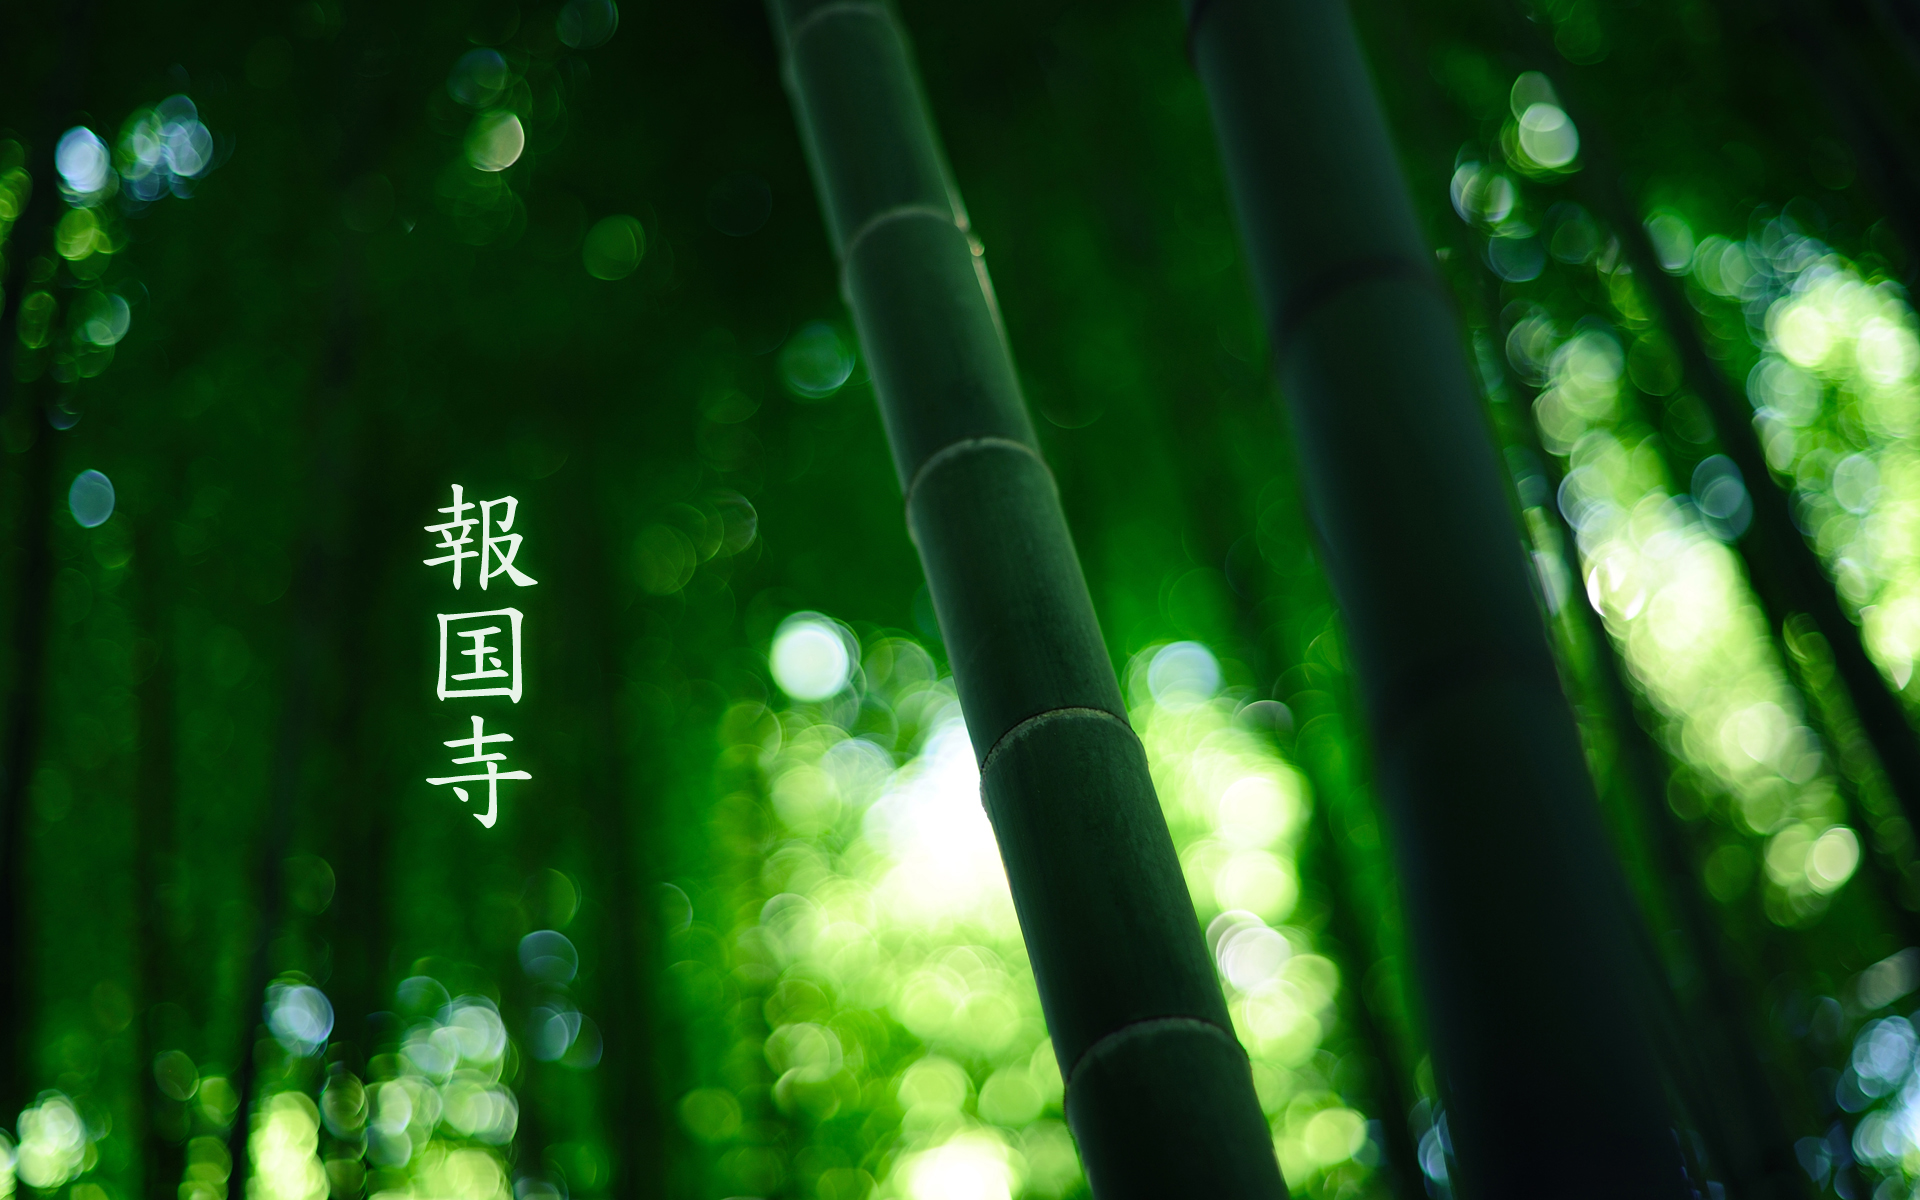 184322 descargar imagen tierra/naturaleza, bambú: fondos de pantalla y protectores de pantalla gratis